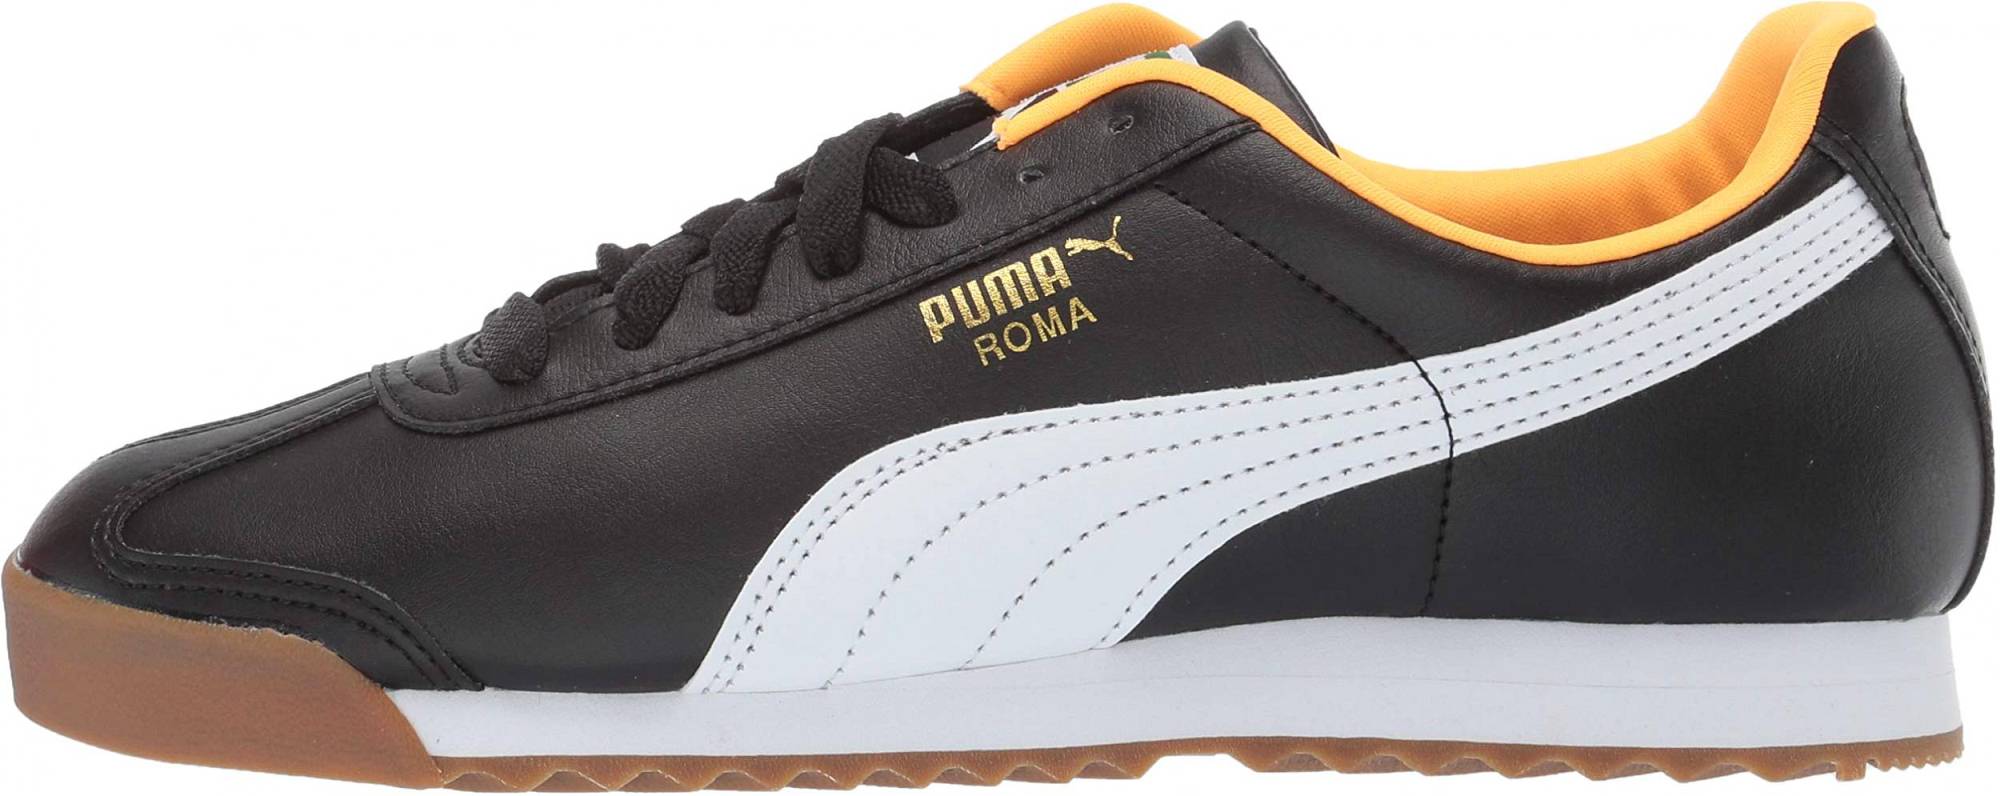 Puma Roma – Shoes Reviews & Reasons To Buy